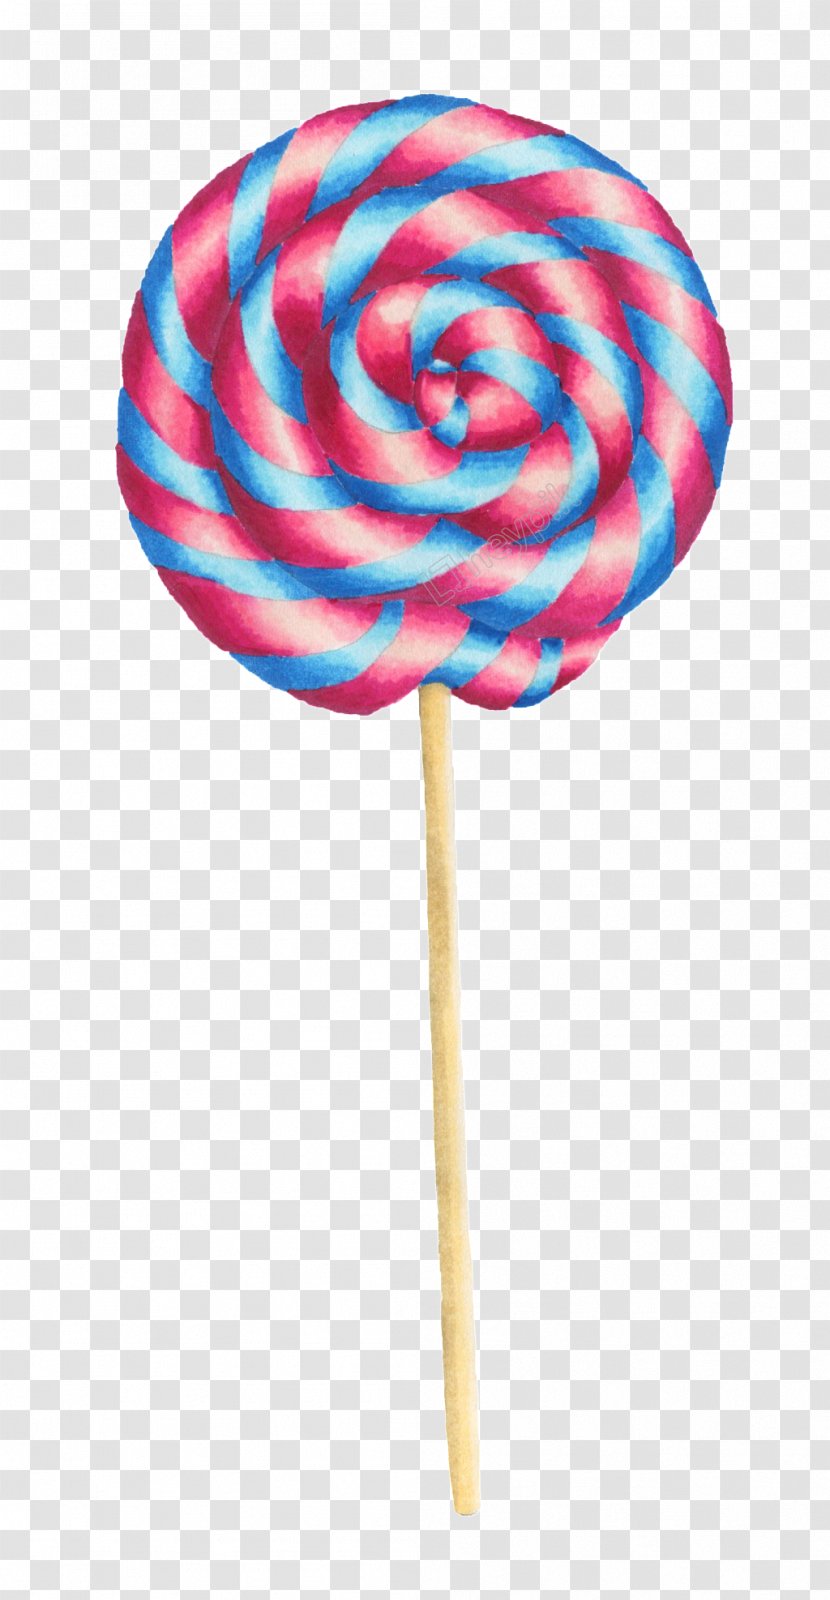 Lollipop Stick Candy Confectionery Hard - Food Pink Transparent PNG